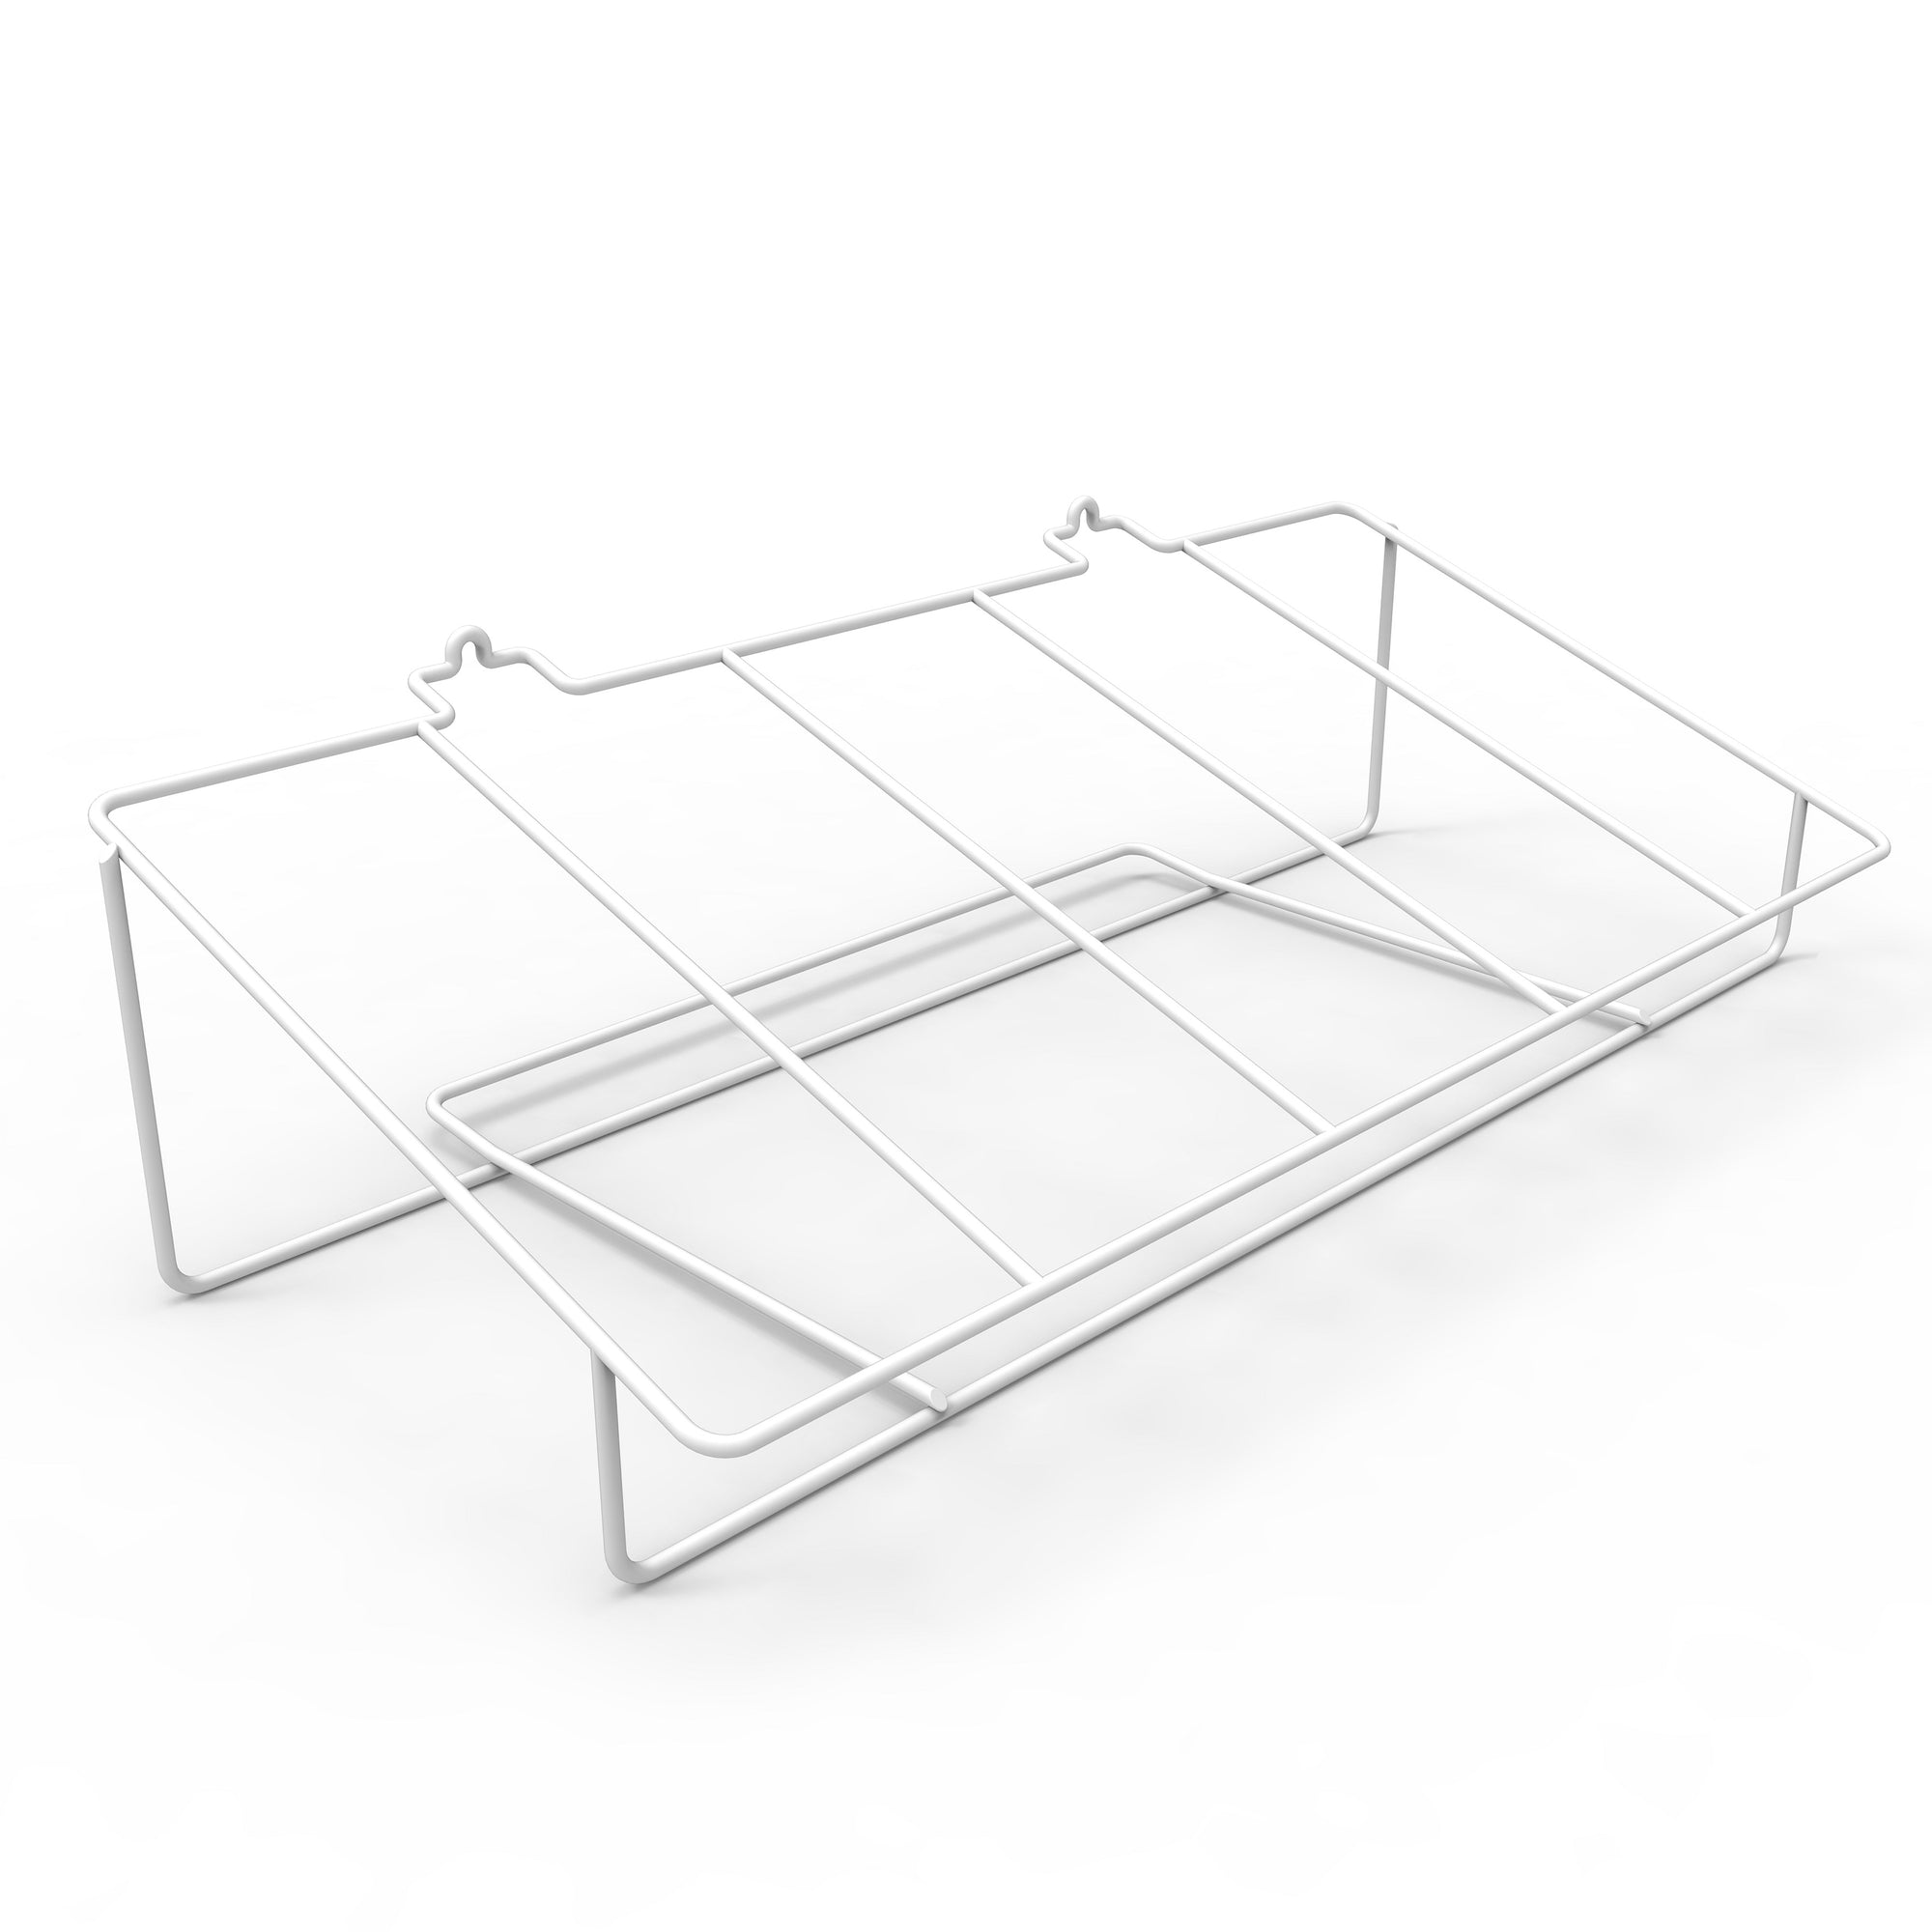 Storex Metal Shelf Rack, Fits 5 Storex Small Book Bins (Bins Sold Separately)